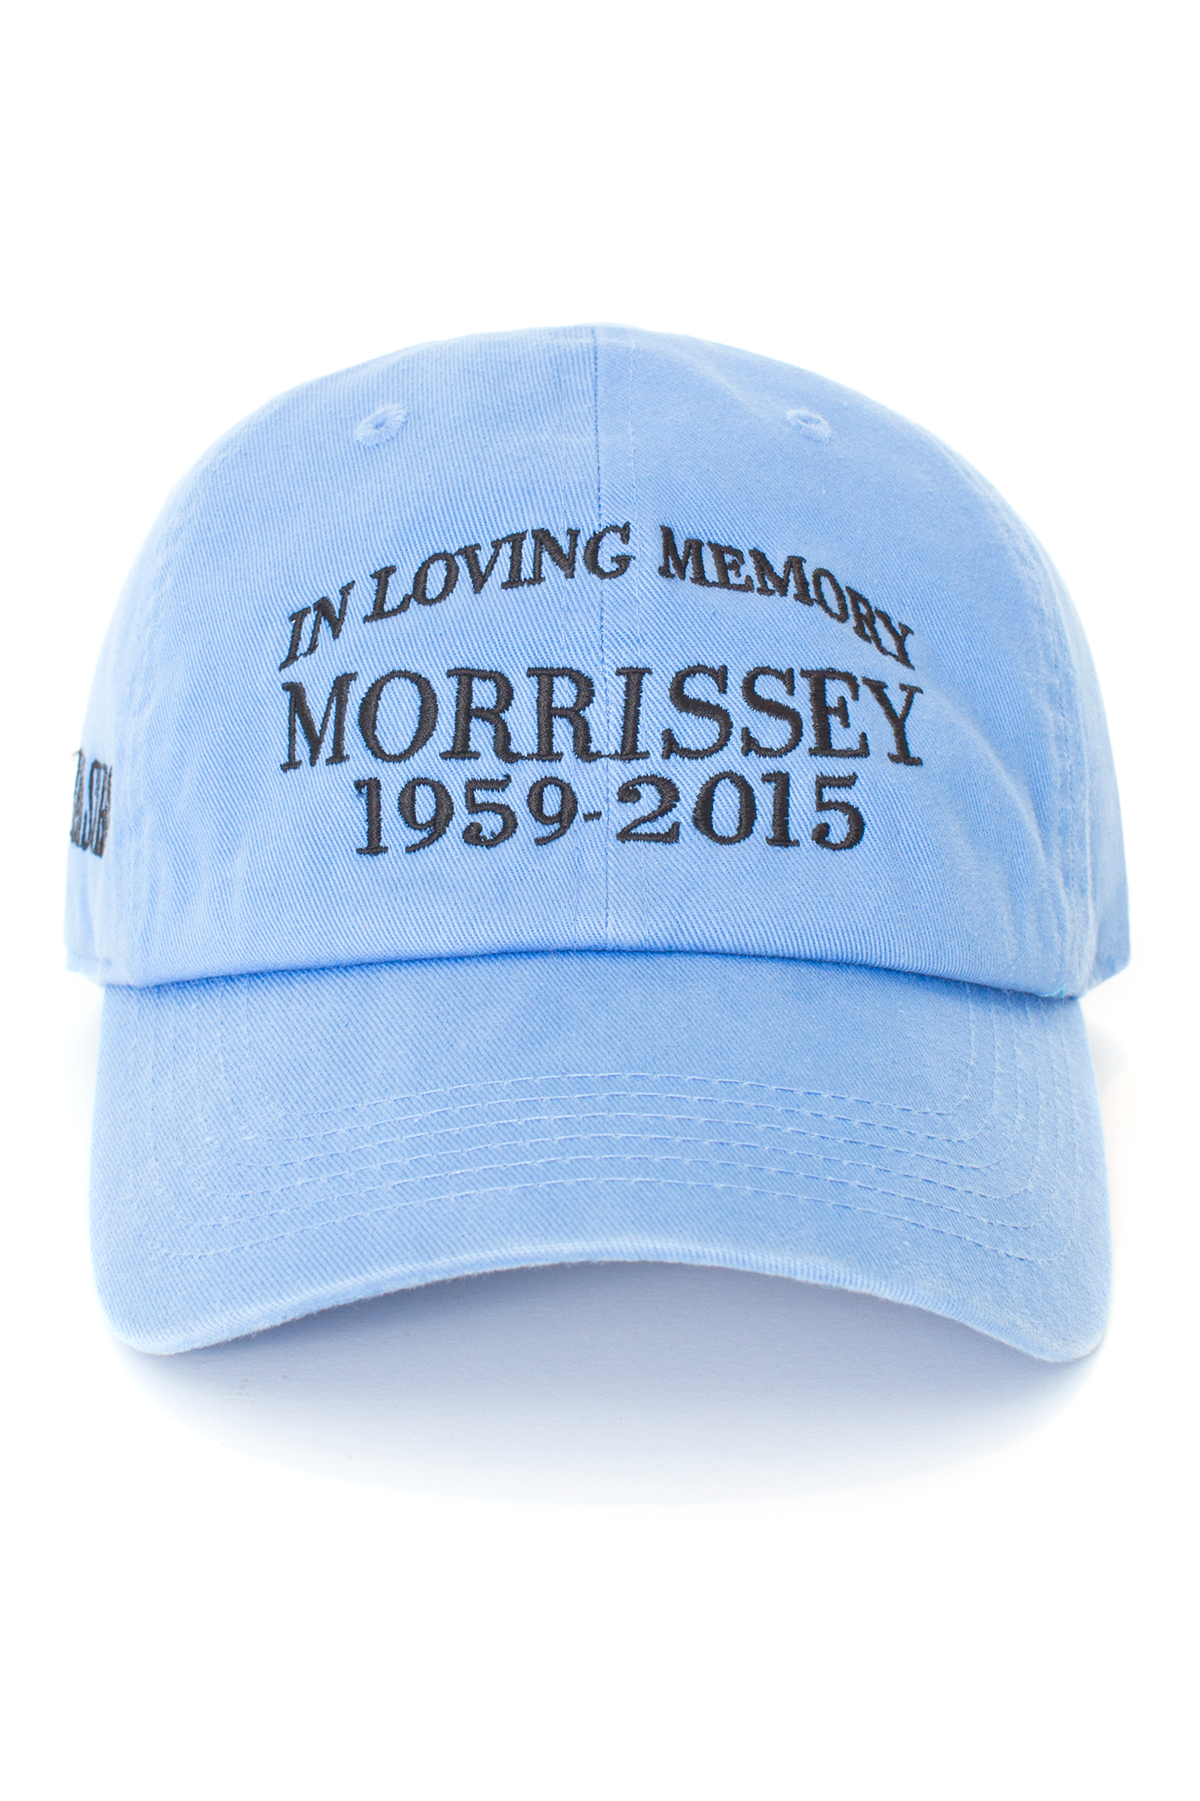 morrissey cap